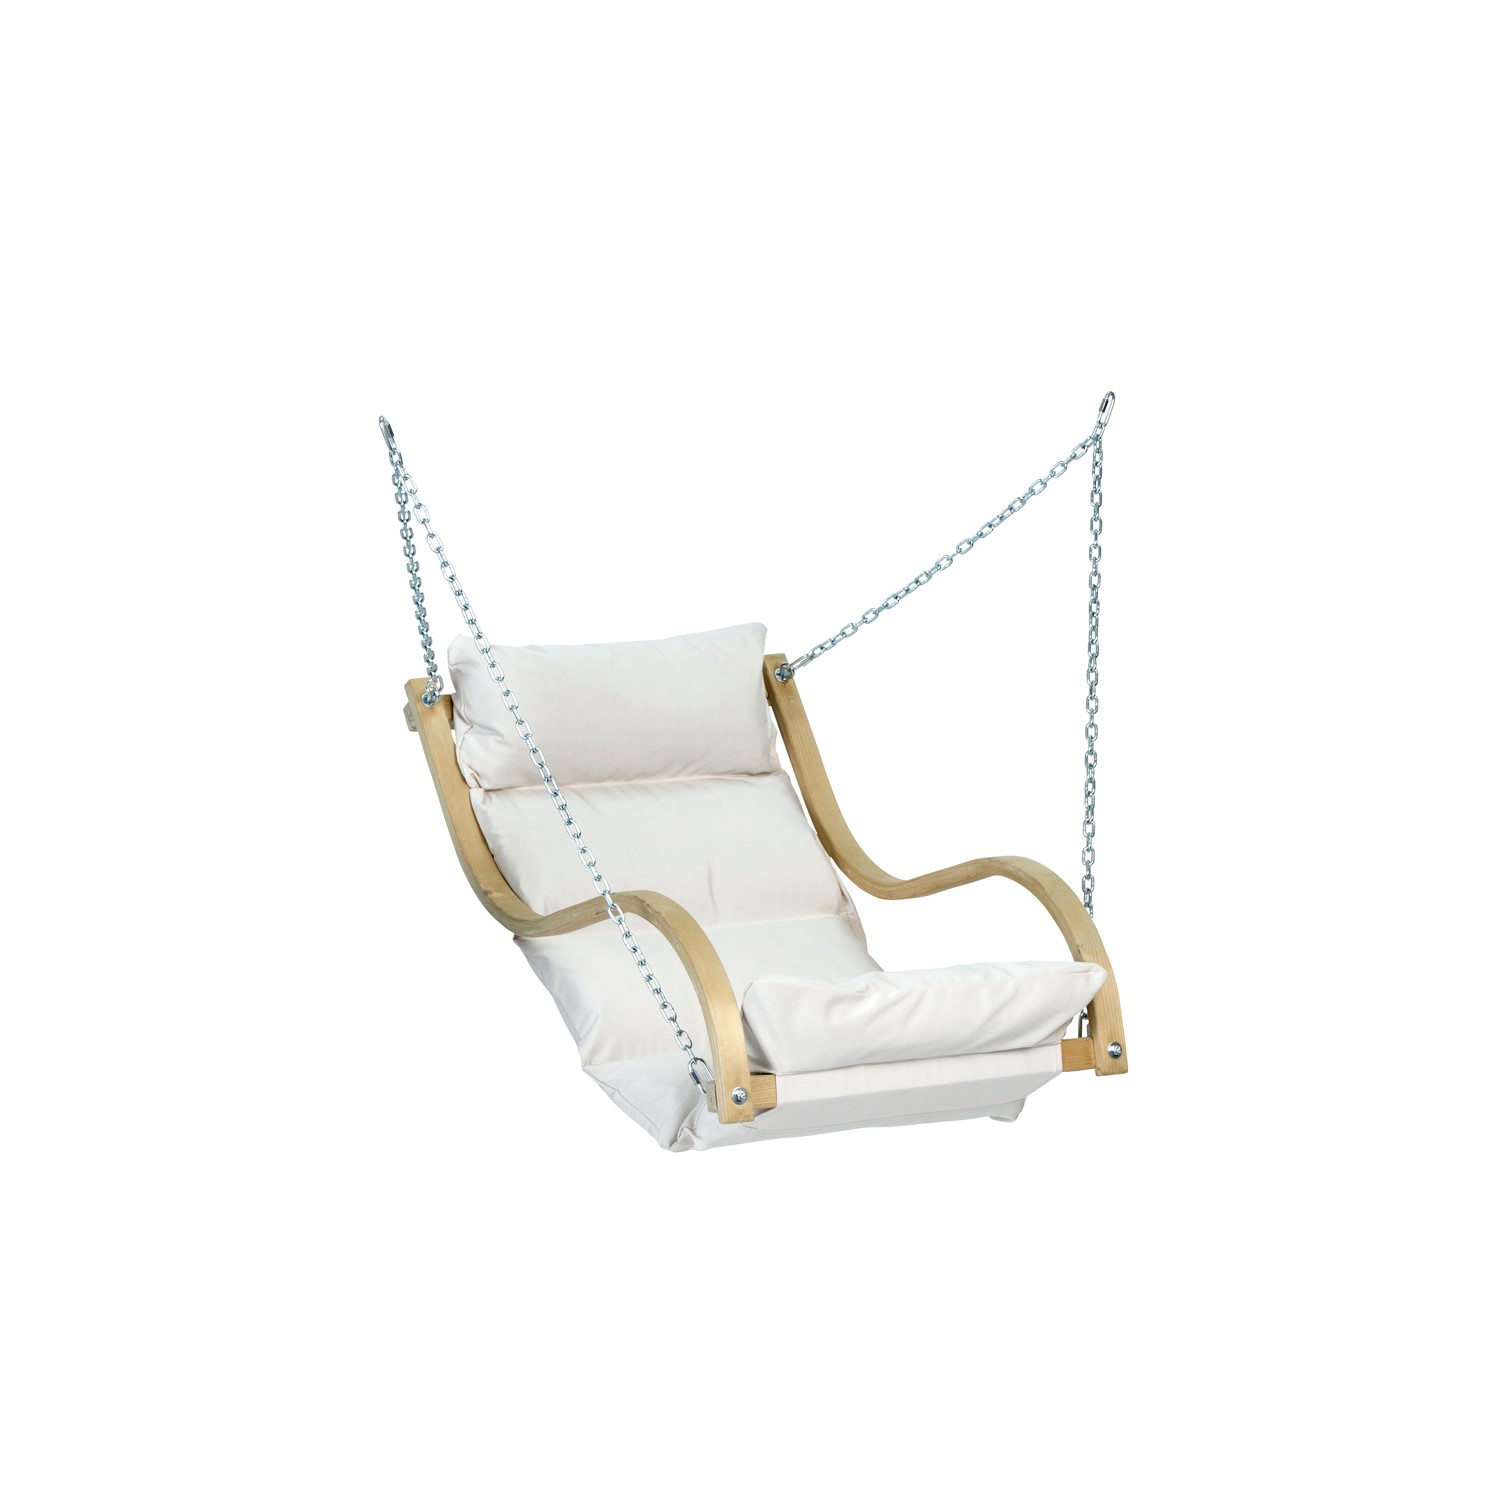 Fat Chair Wooden Garden Swing Chair With Cream Cushion Chair